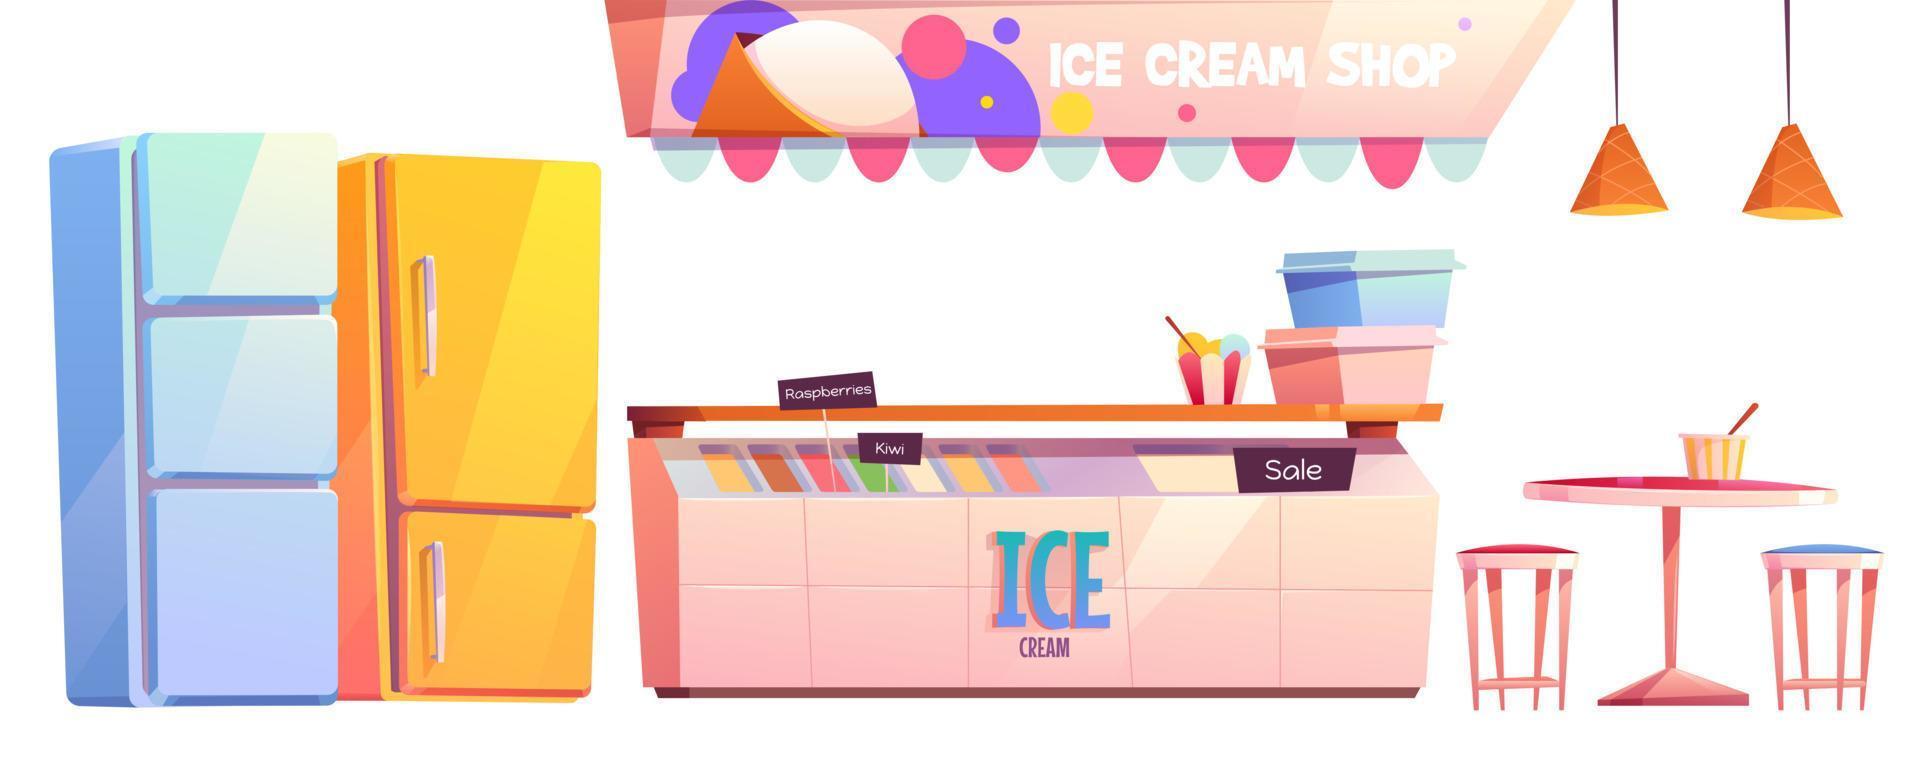 Ice cream shop or cafe interior equipment set vector